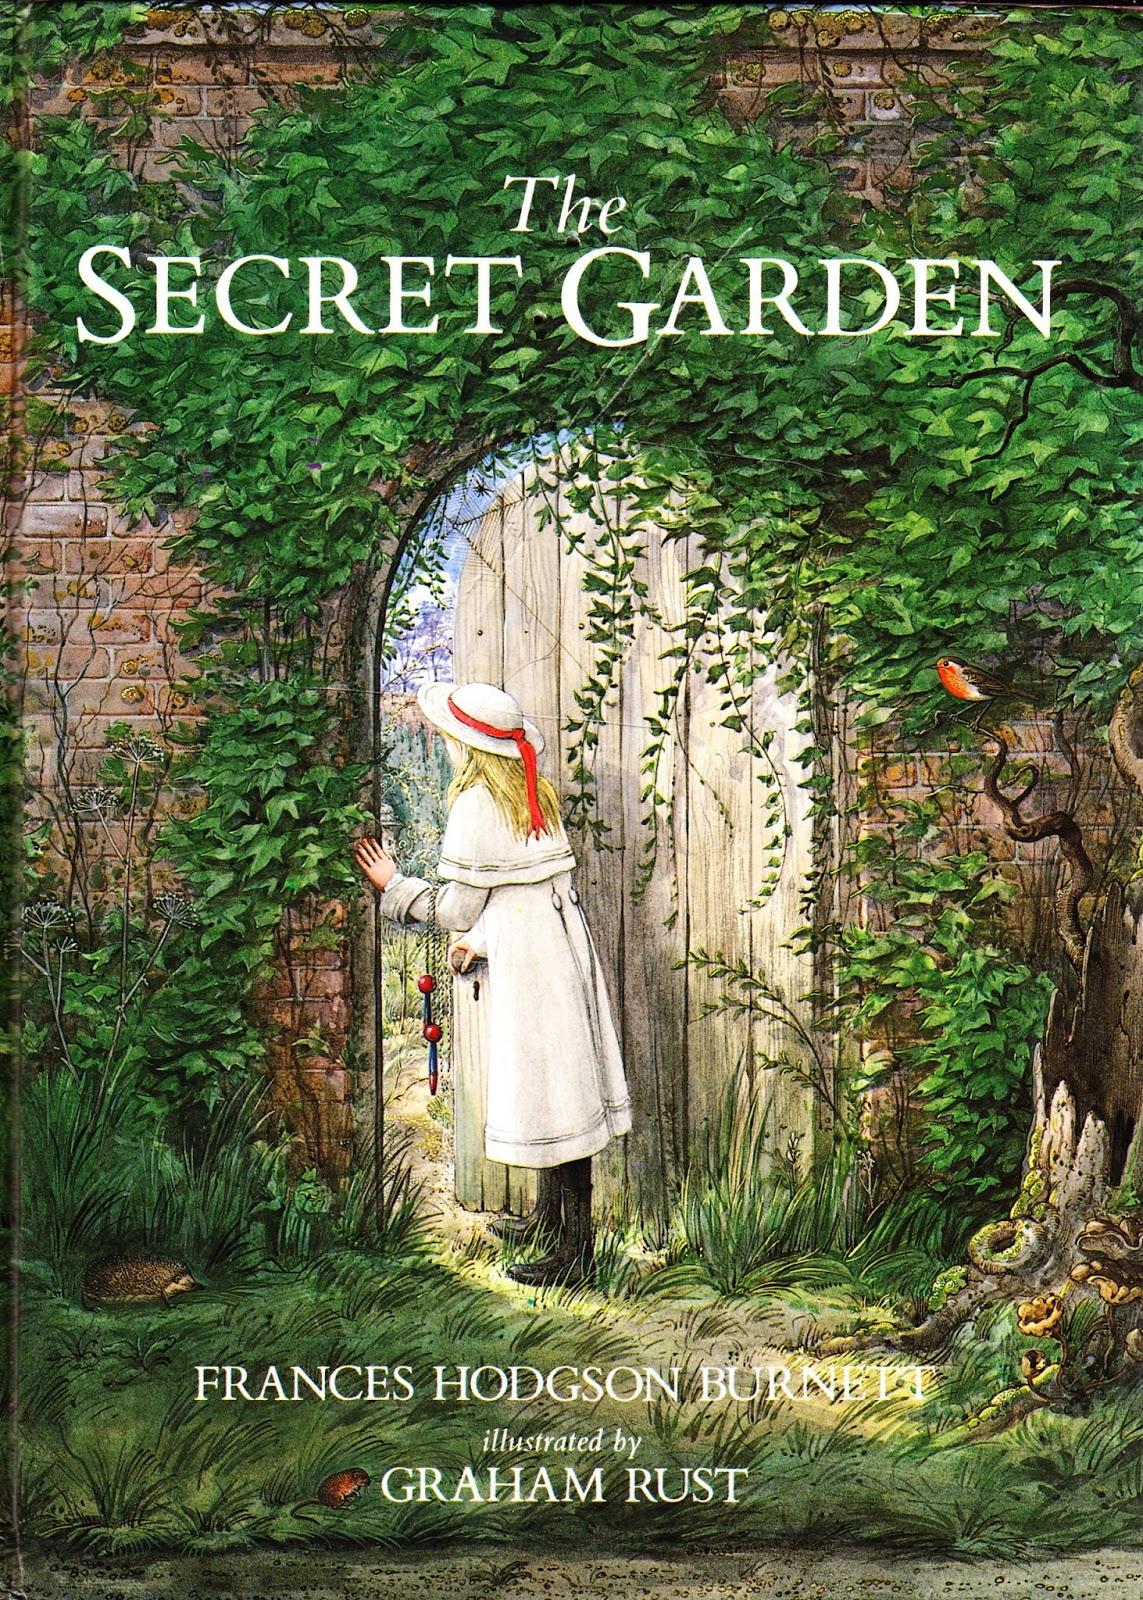 Book report on the secret garden